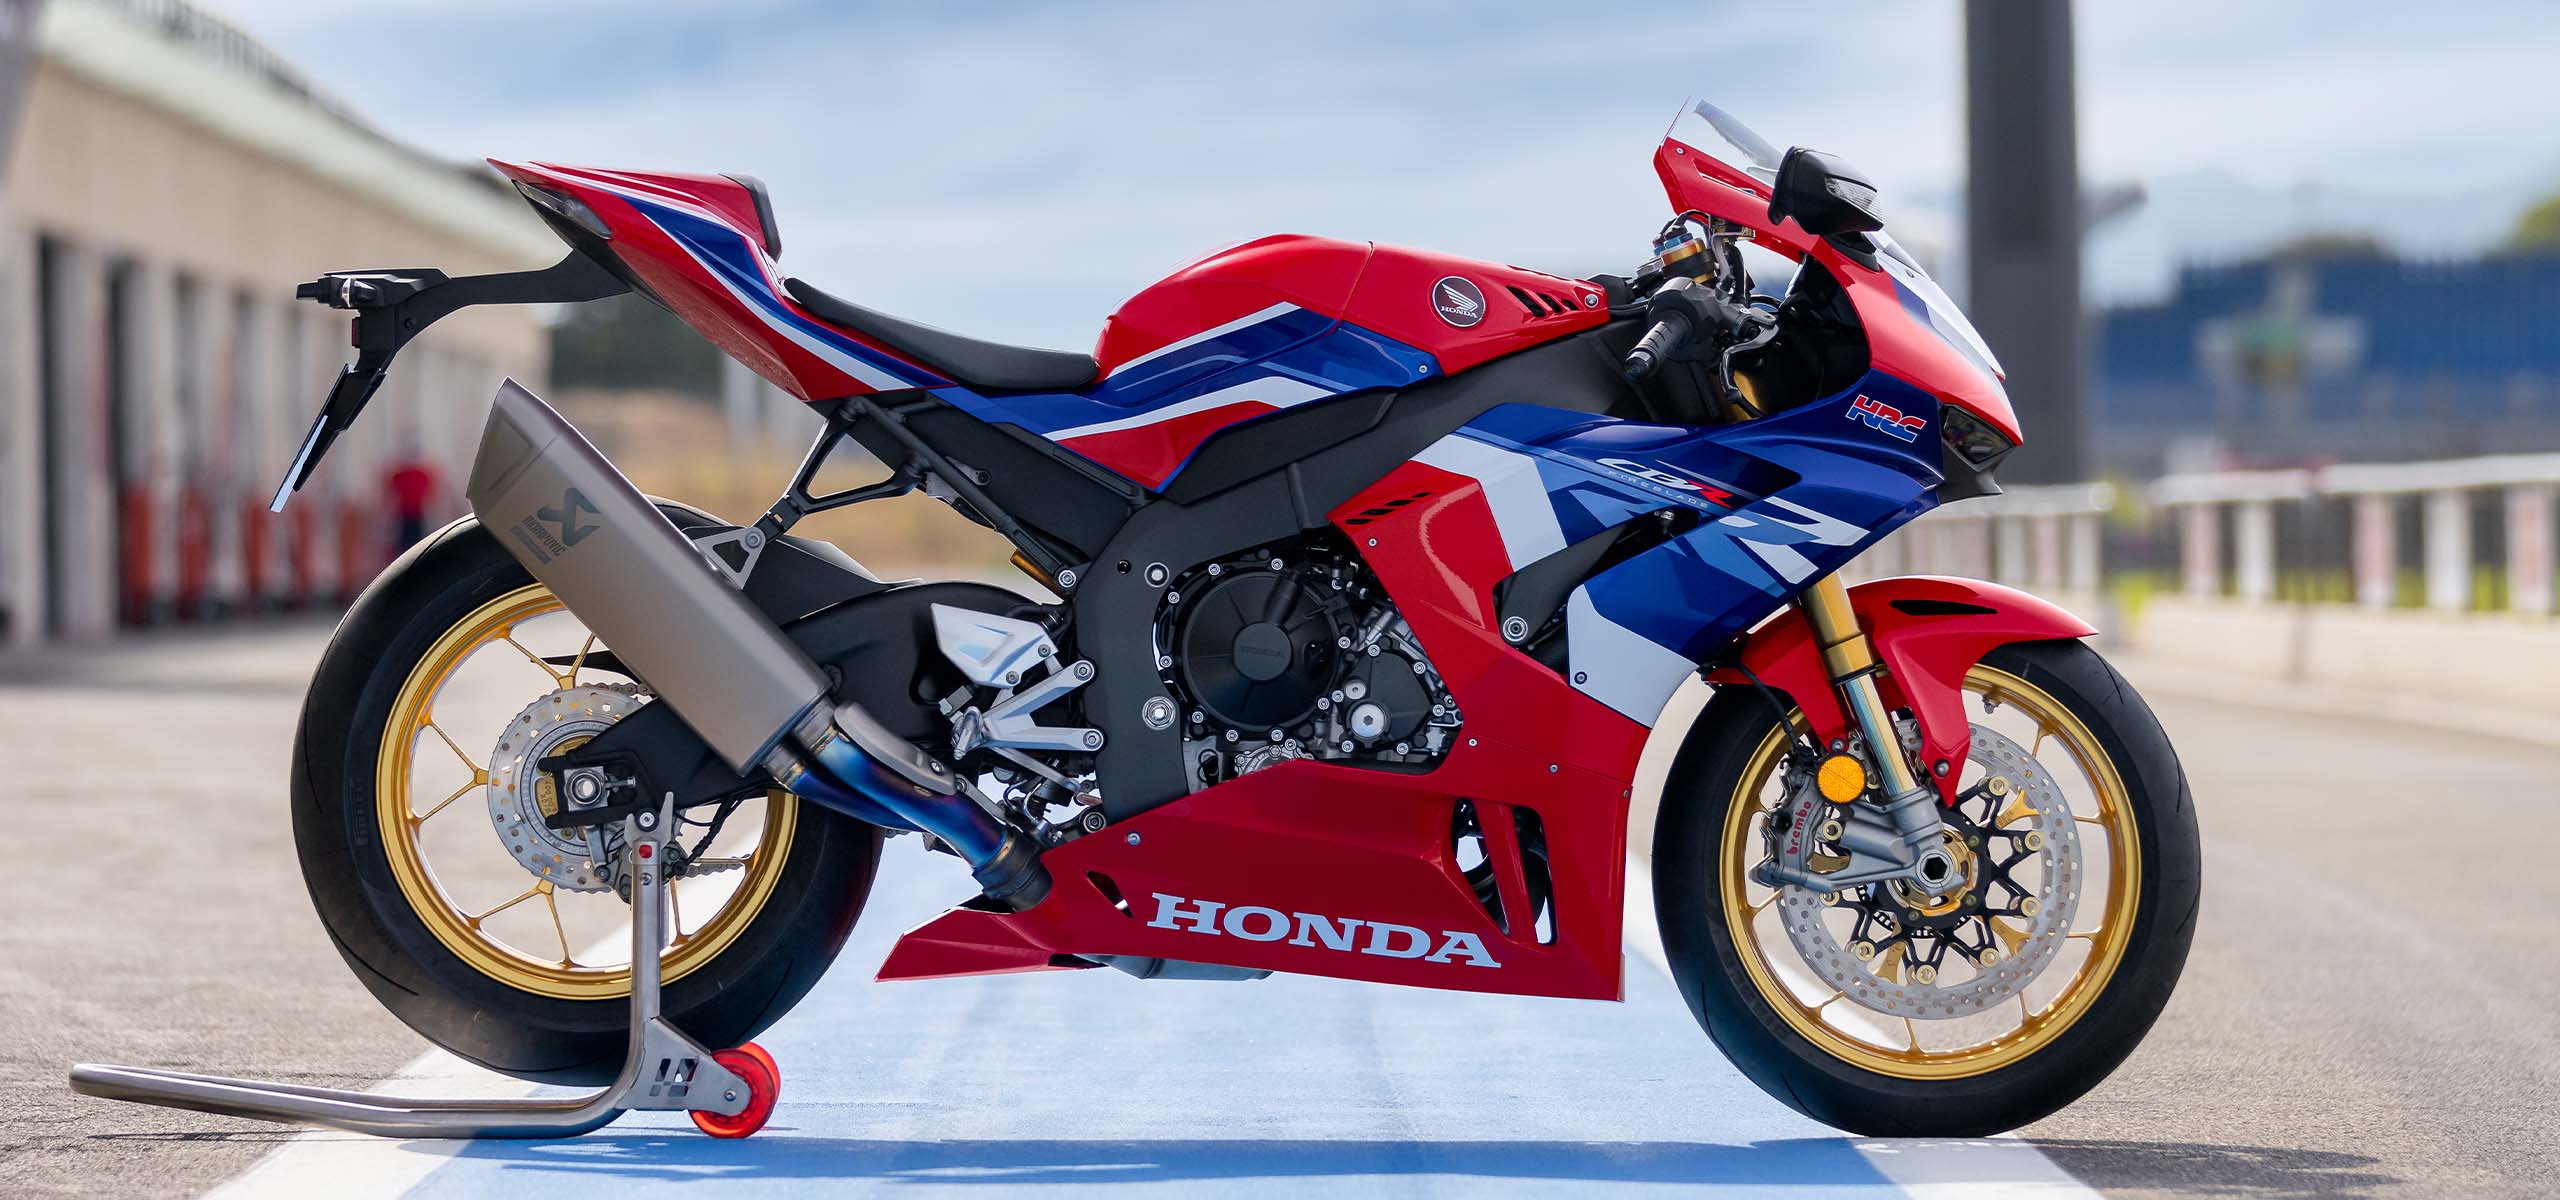 Honda Fireblade motorcycle